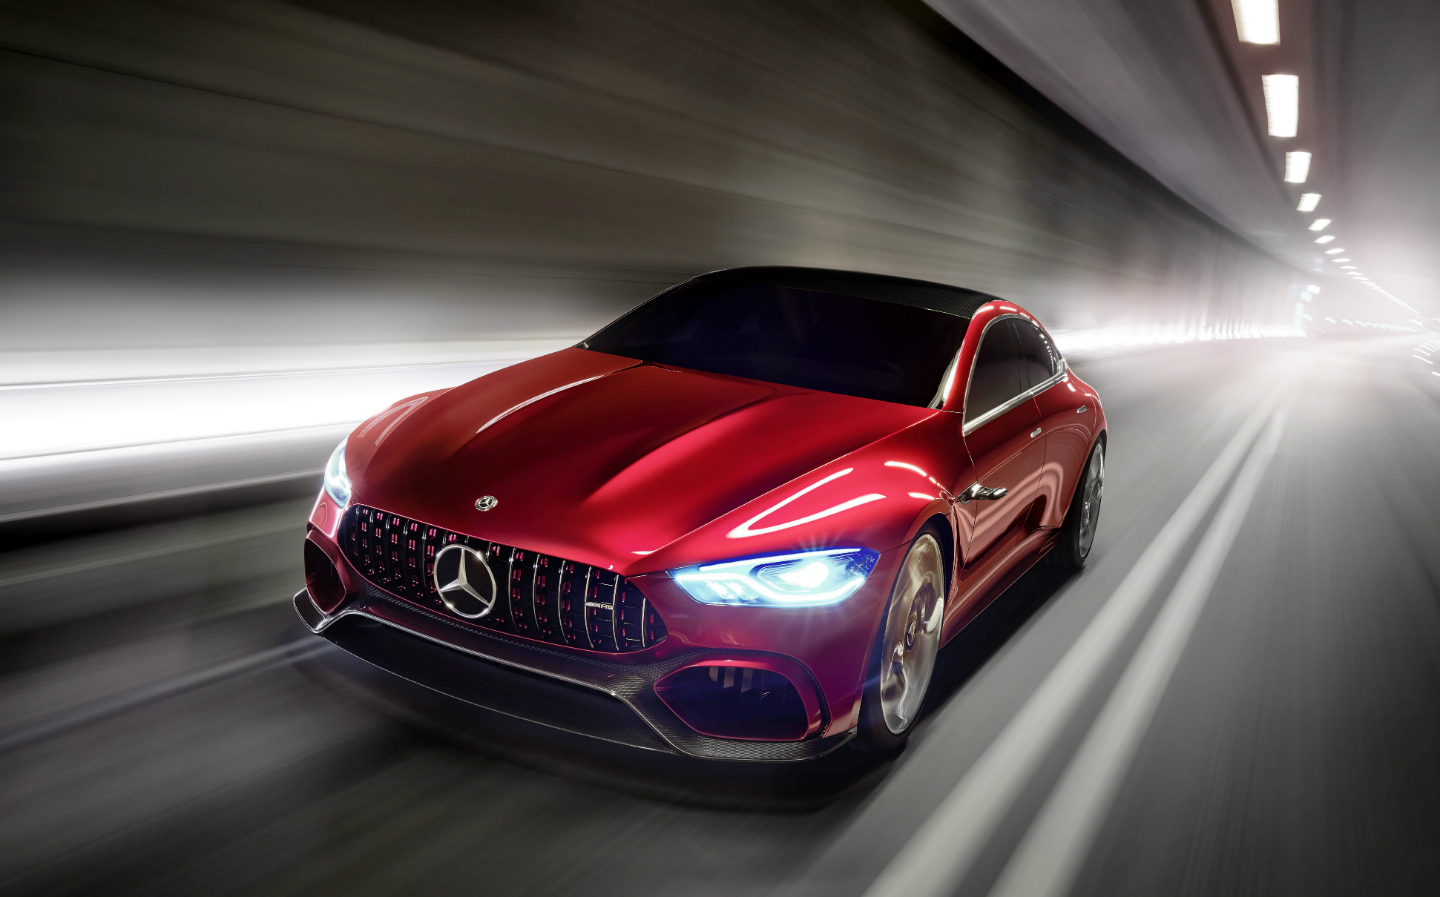 Mercedes-AMG GT Concept: hybrid power for luxury tourer